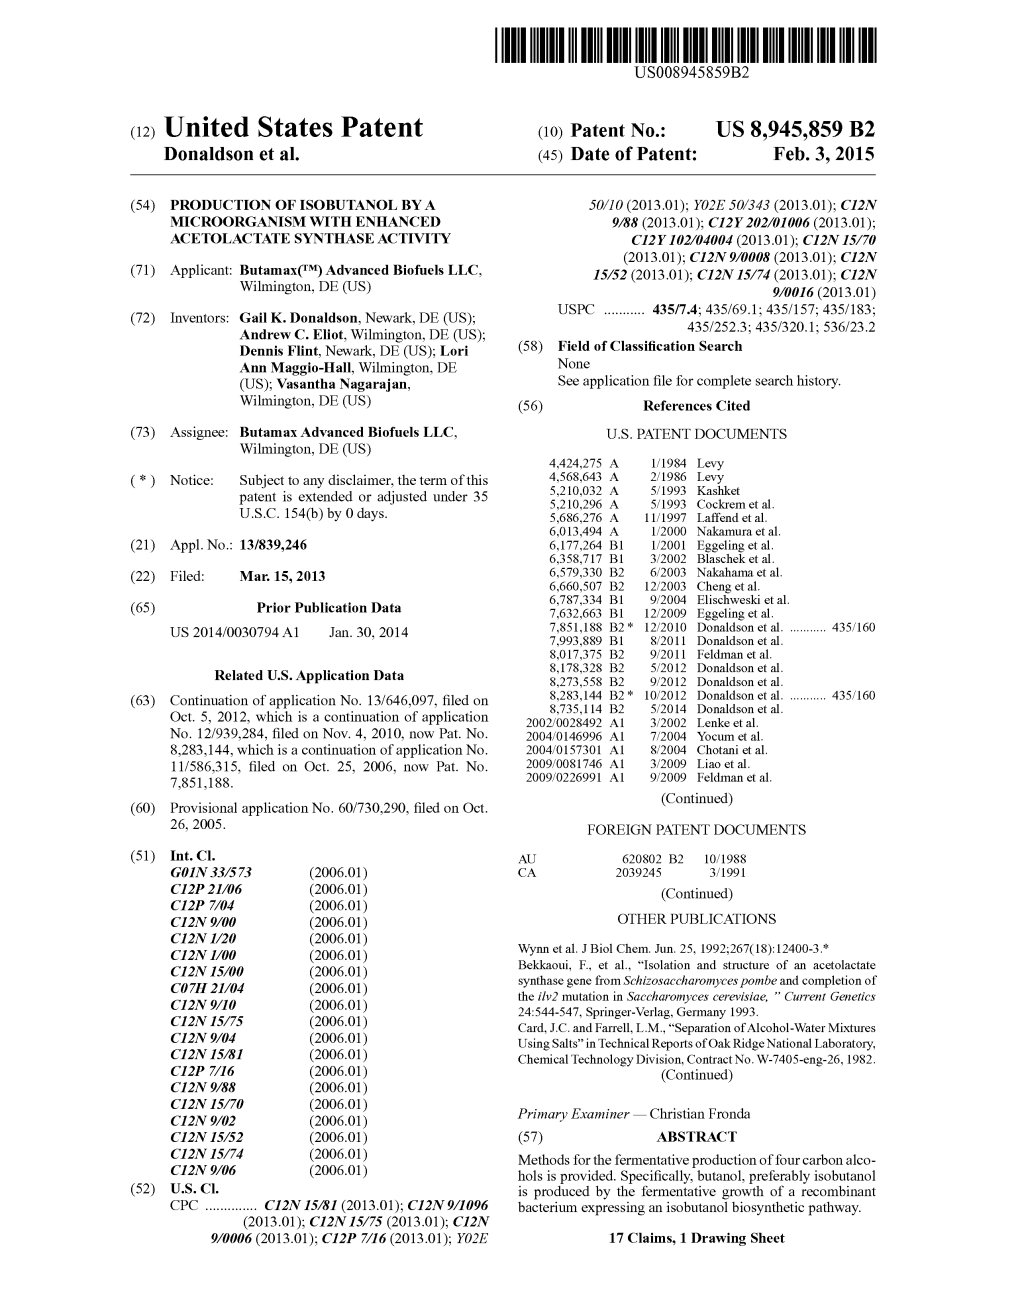 (12) United States Patent (10) Patent No.: US 8,945,859 B2 Donaldson Et Al